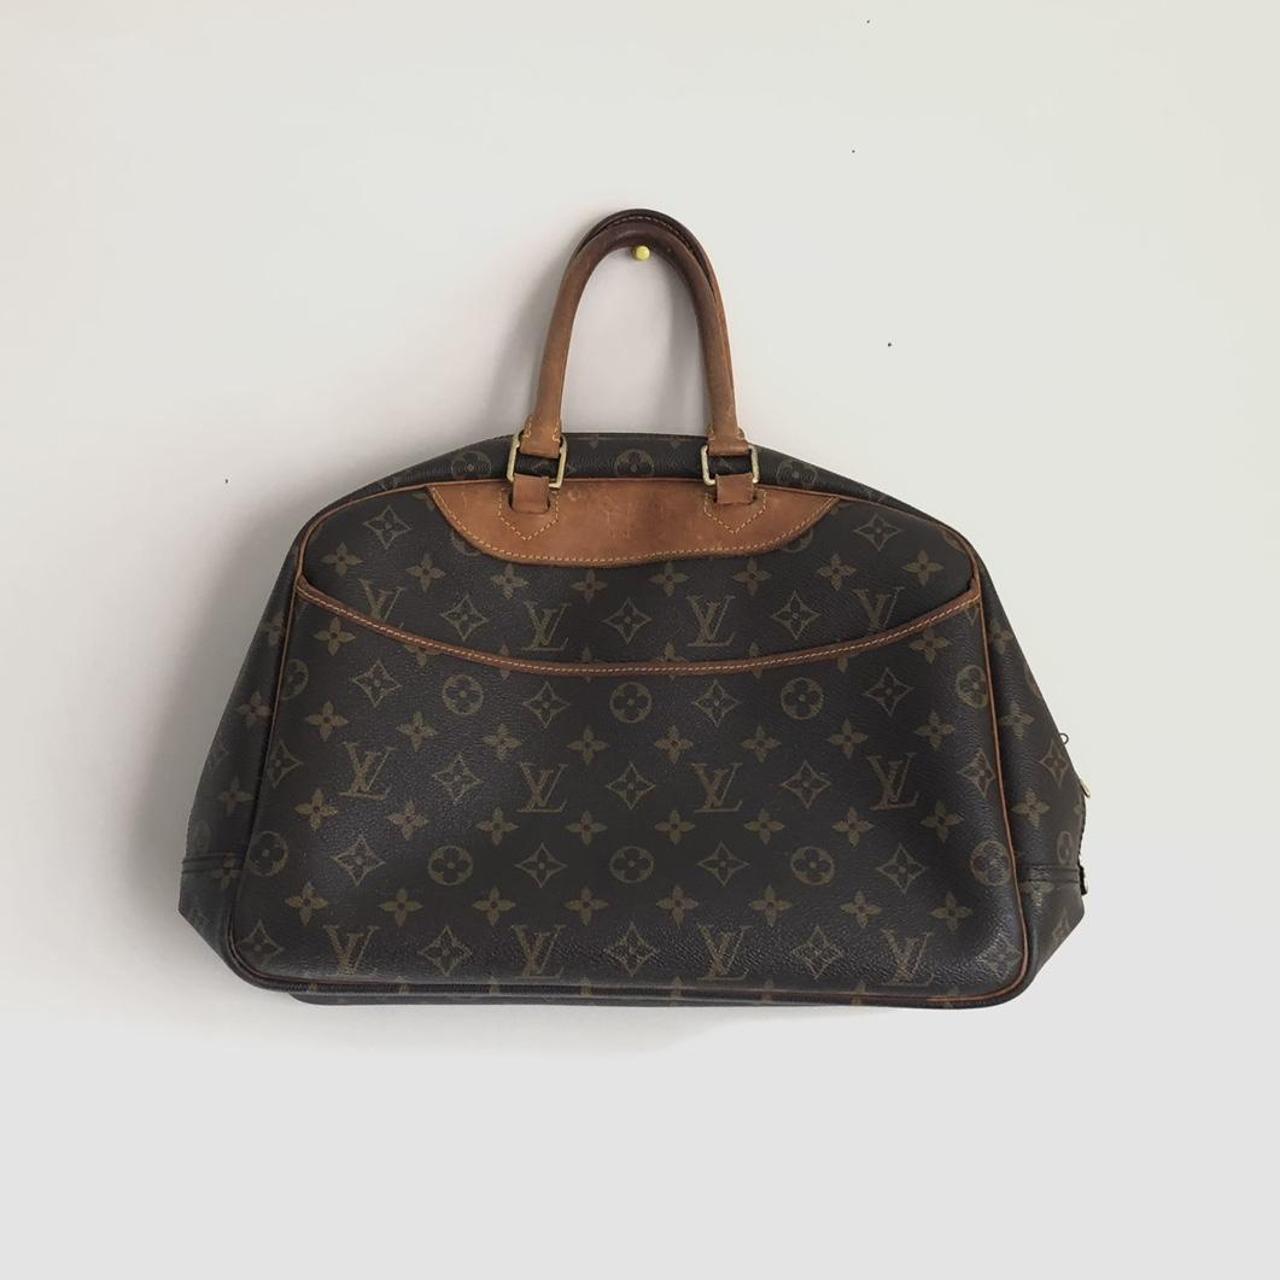 Louis Vuitton Deauville Monogramed Brown/Tan Top Handle Tote, VTG,  AUTHENTIC